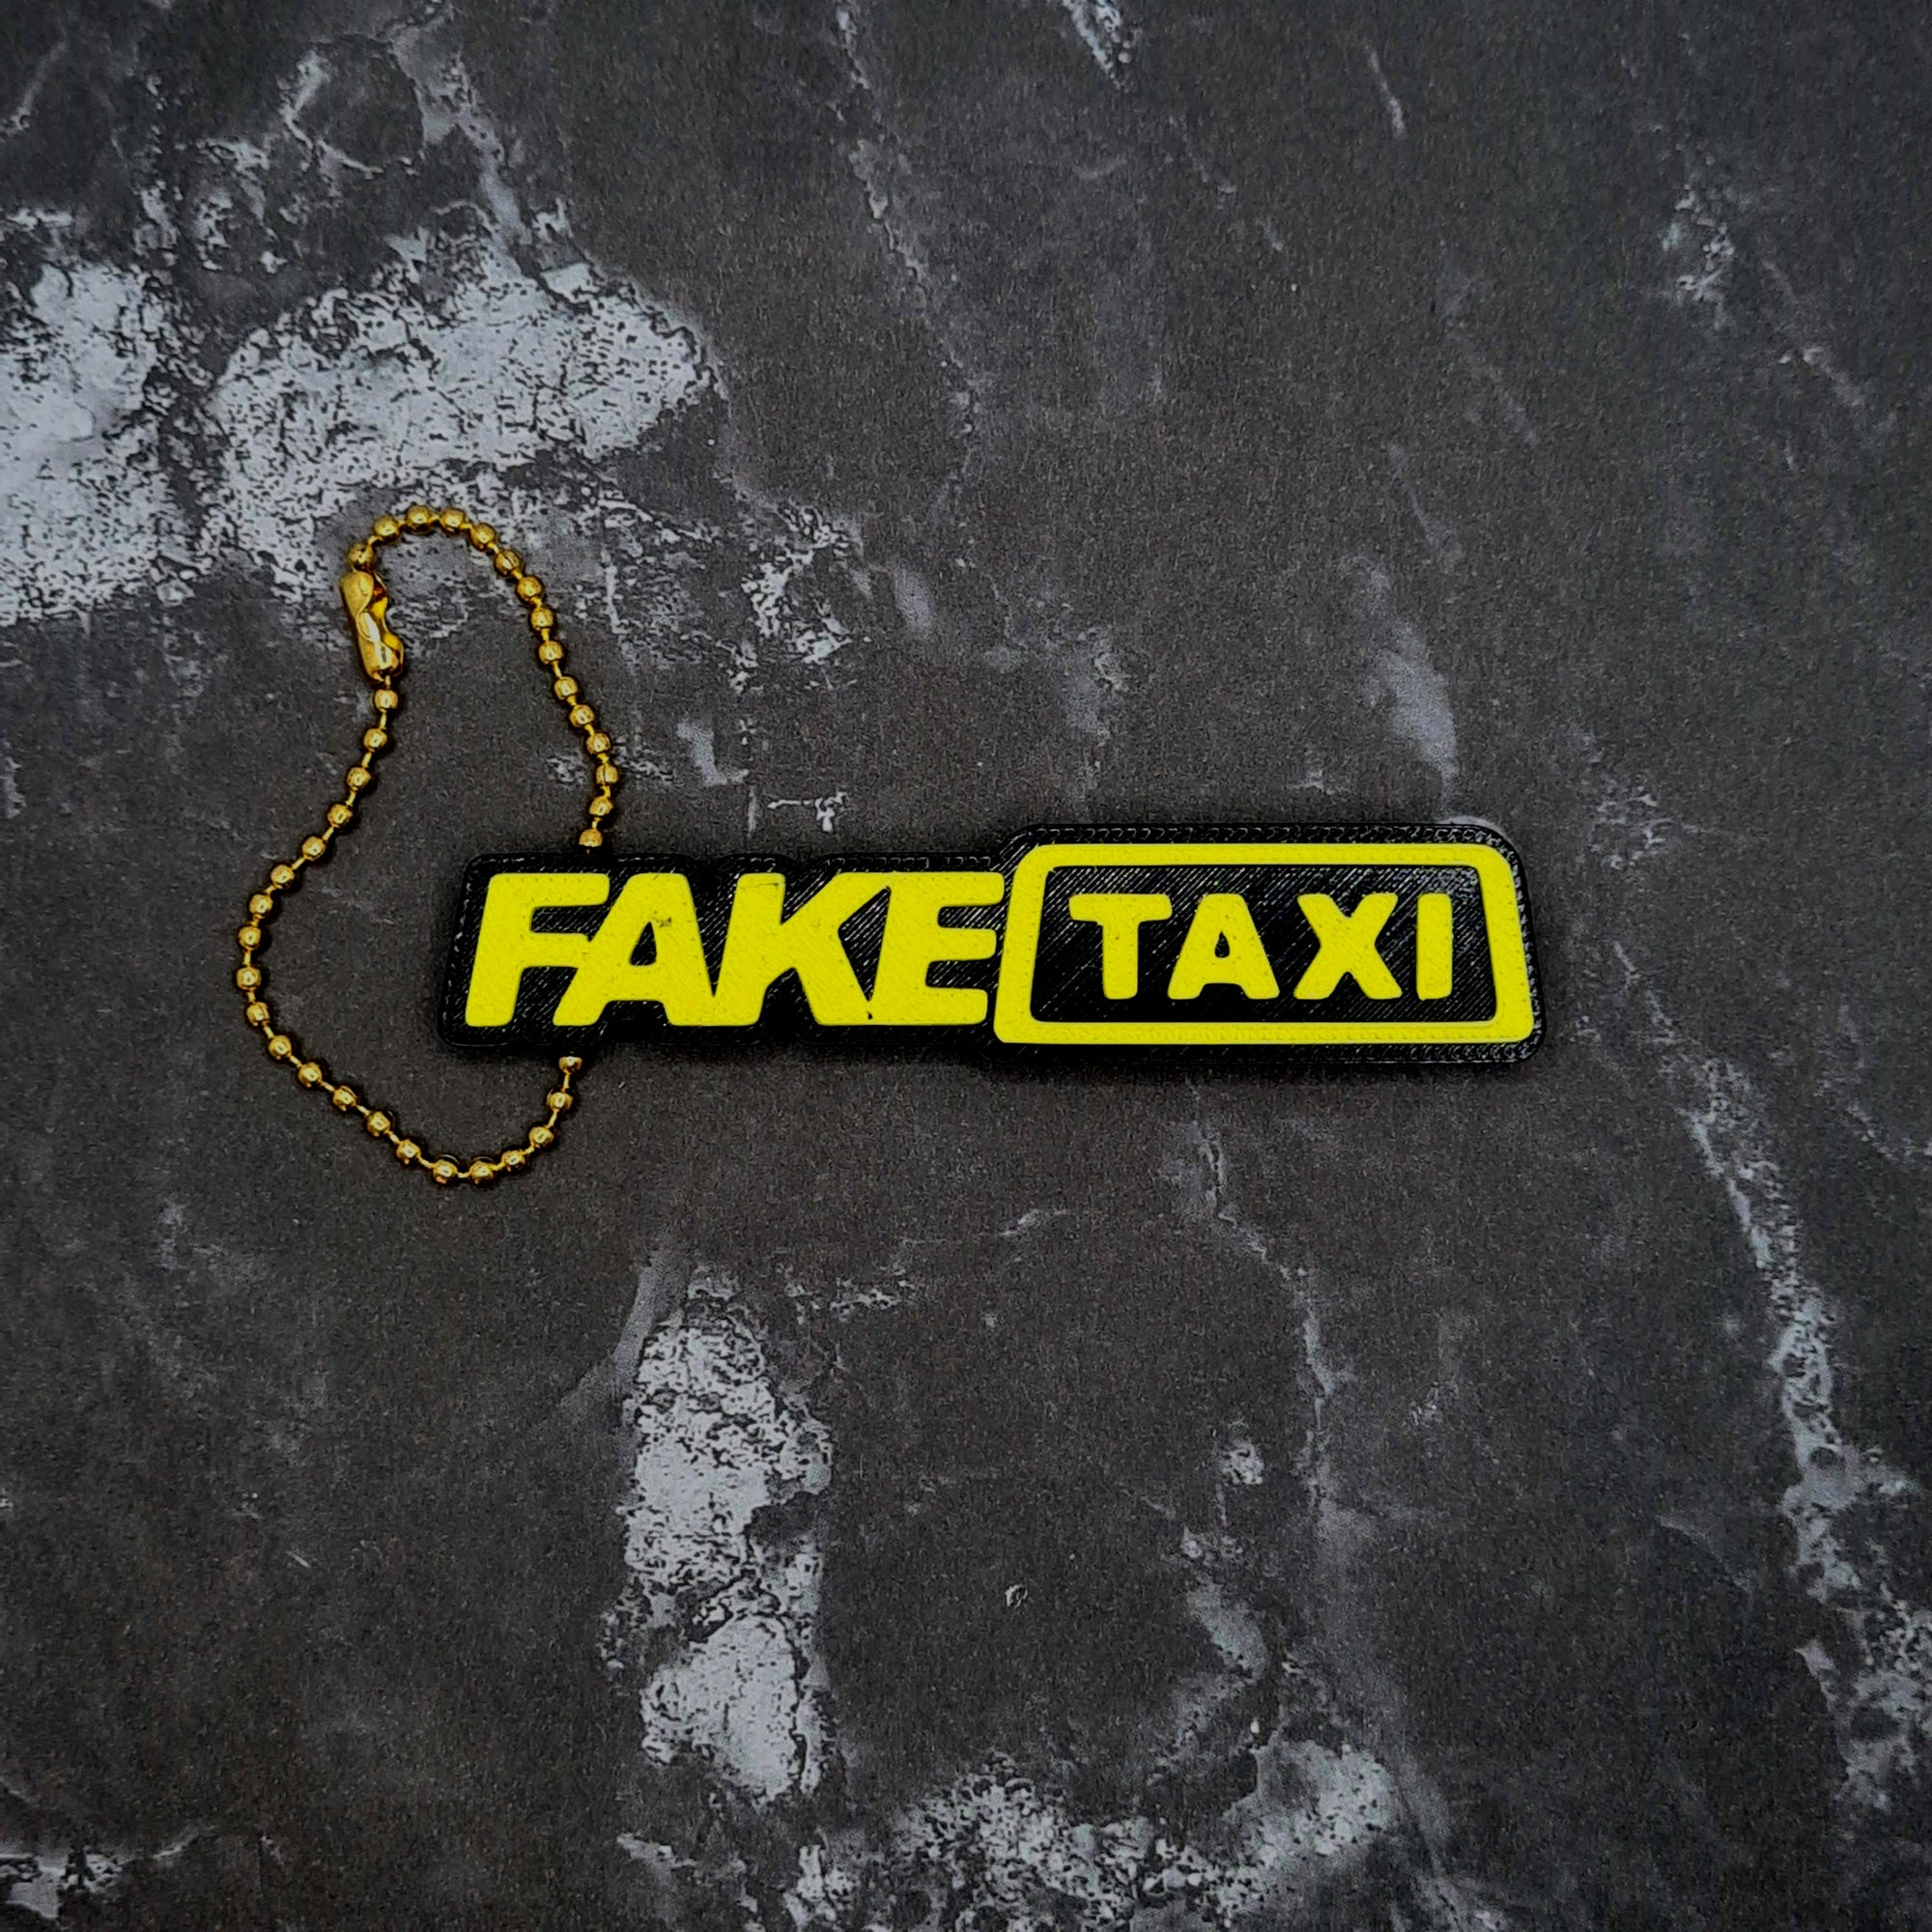 Fake Taxi Keychain!